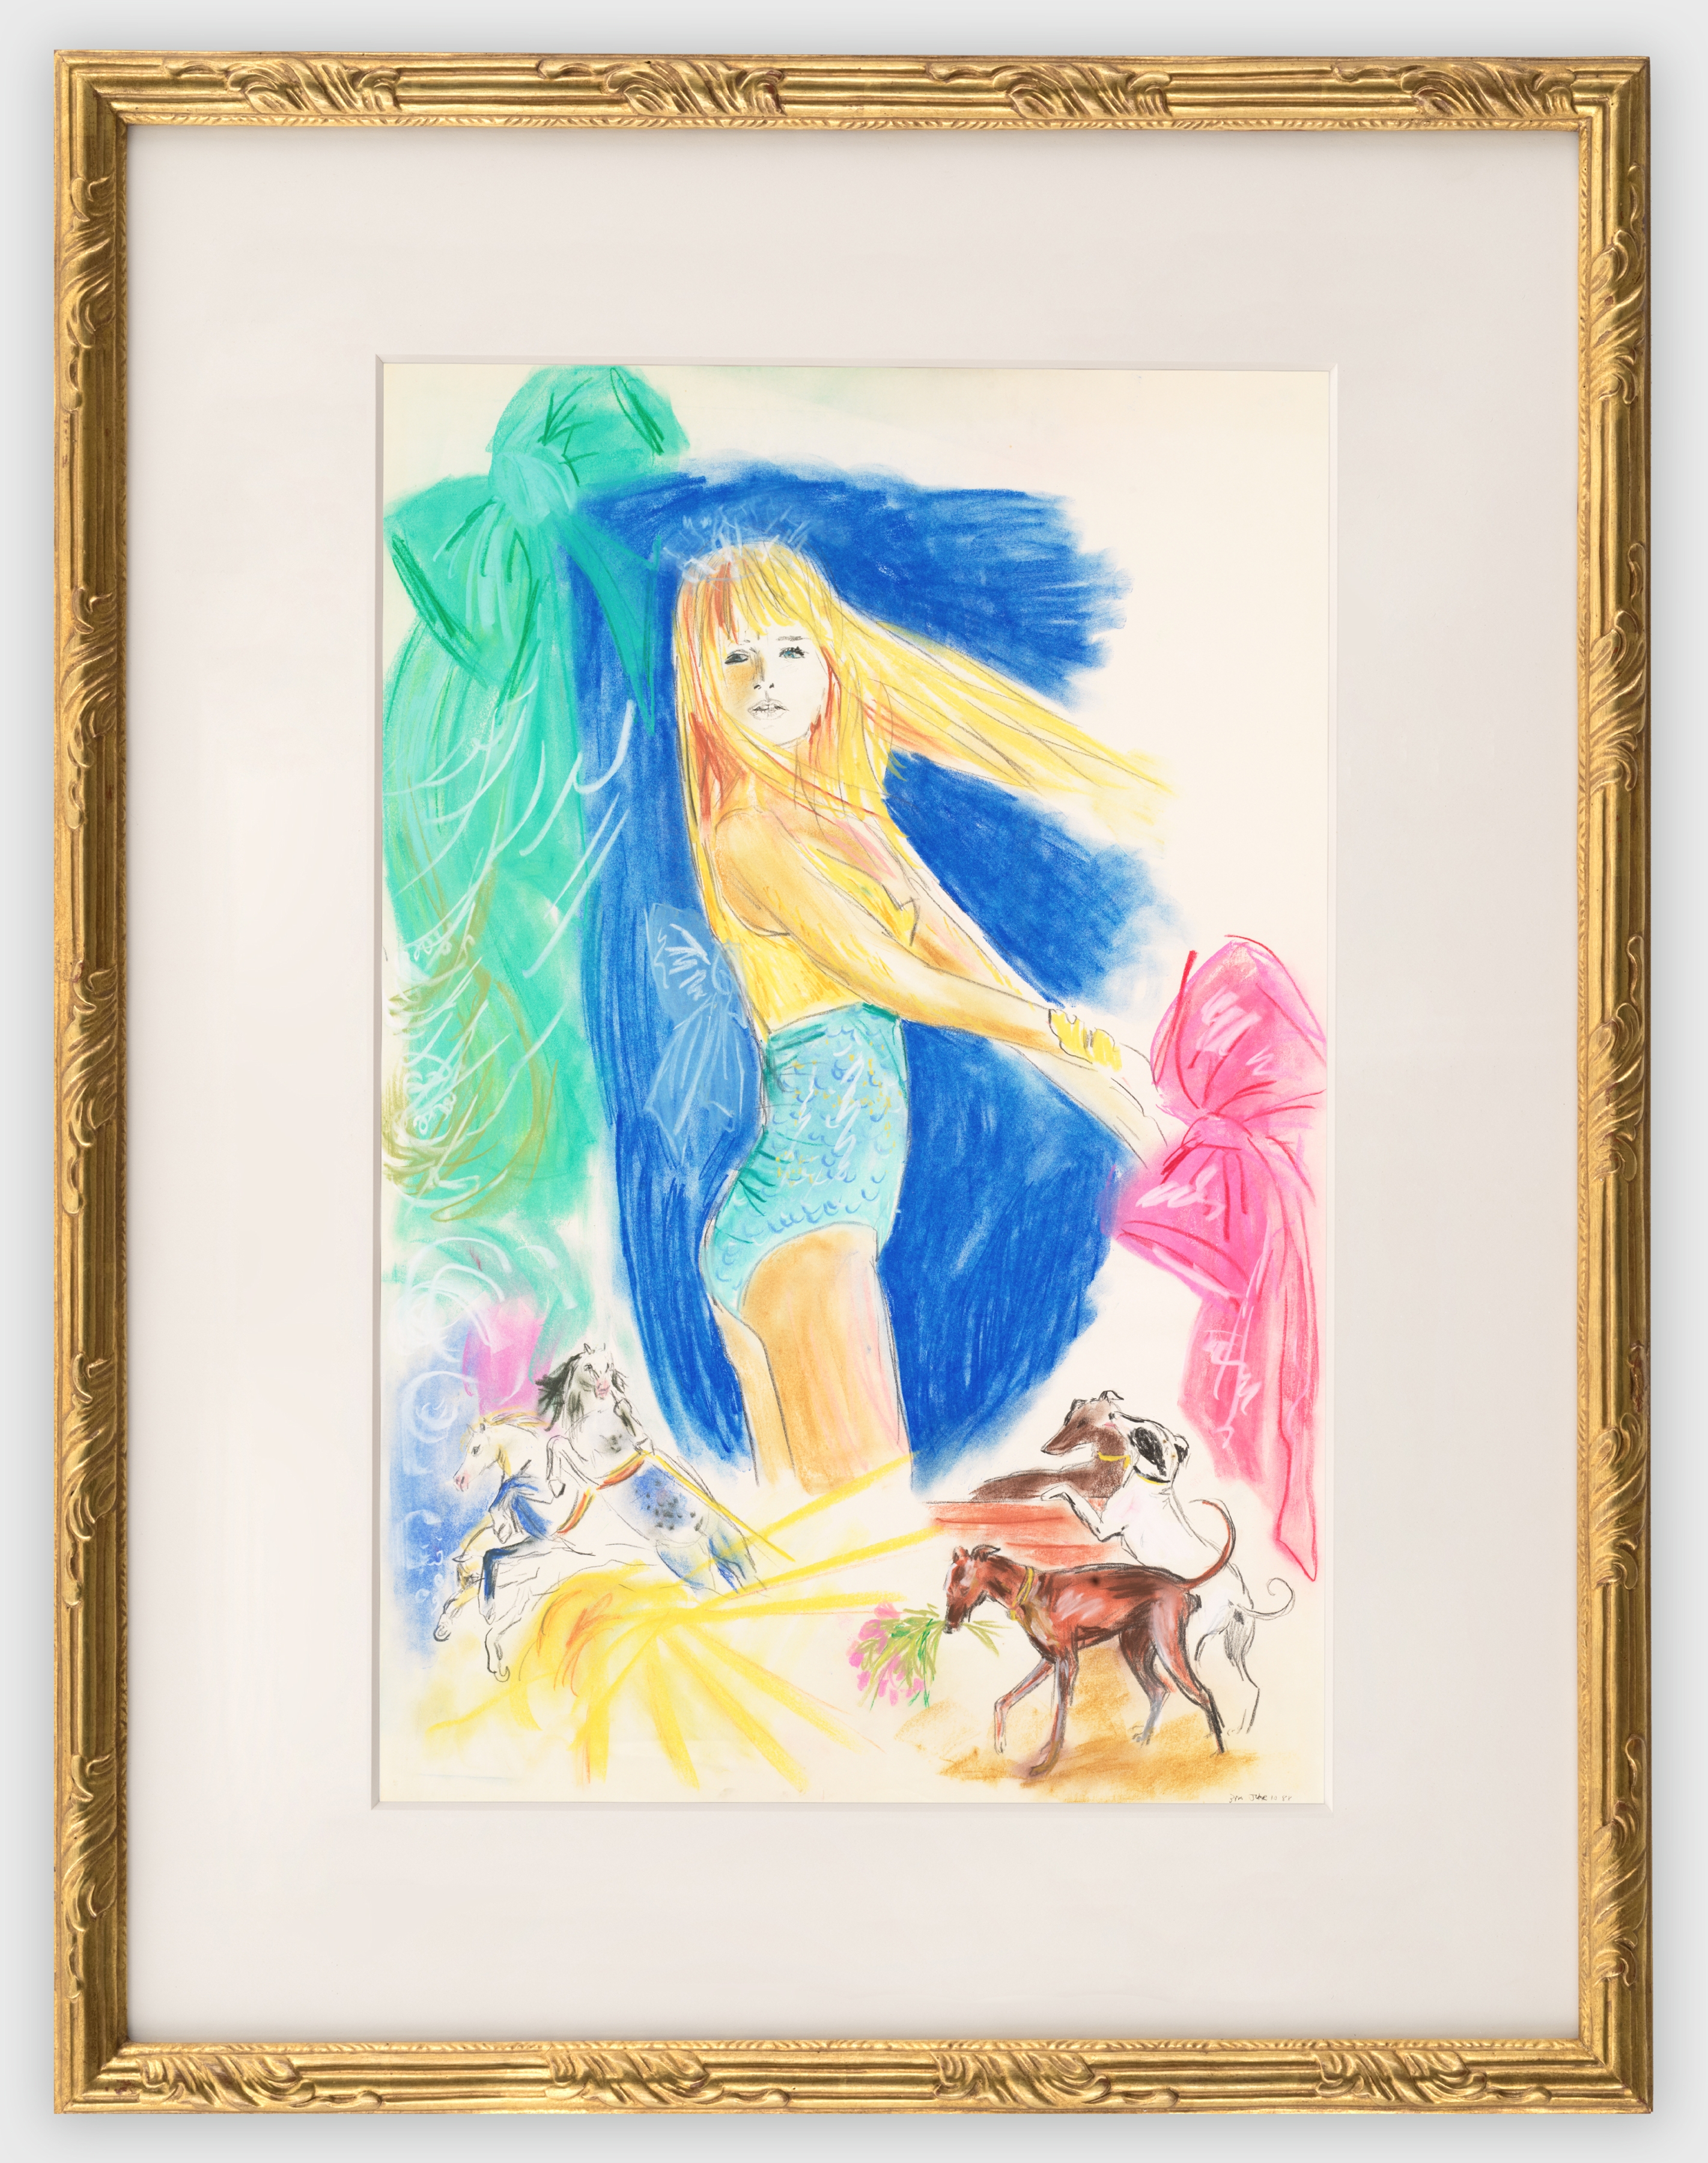 KAREN KILIMNIK

Untitled

1988

Pastel and crayon on paper

89 x 58.5 cm / 35 x 23 in

KILIM51334